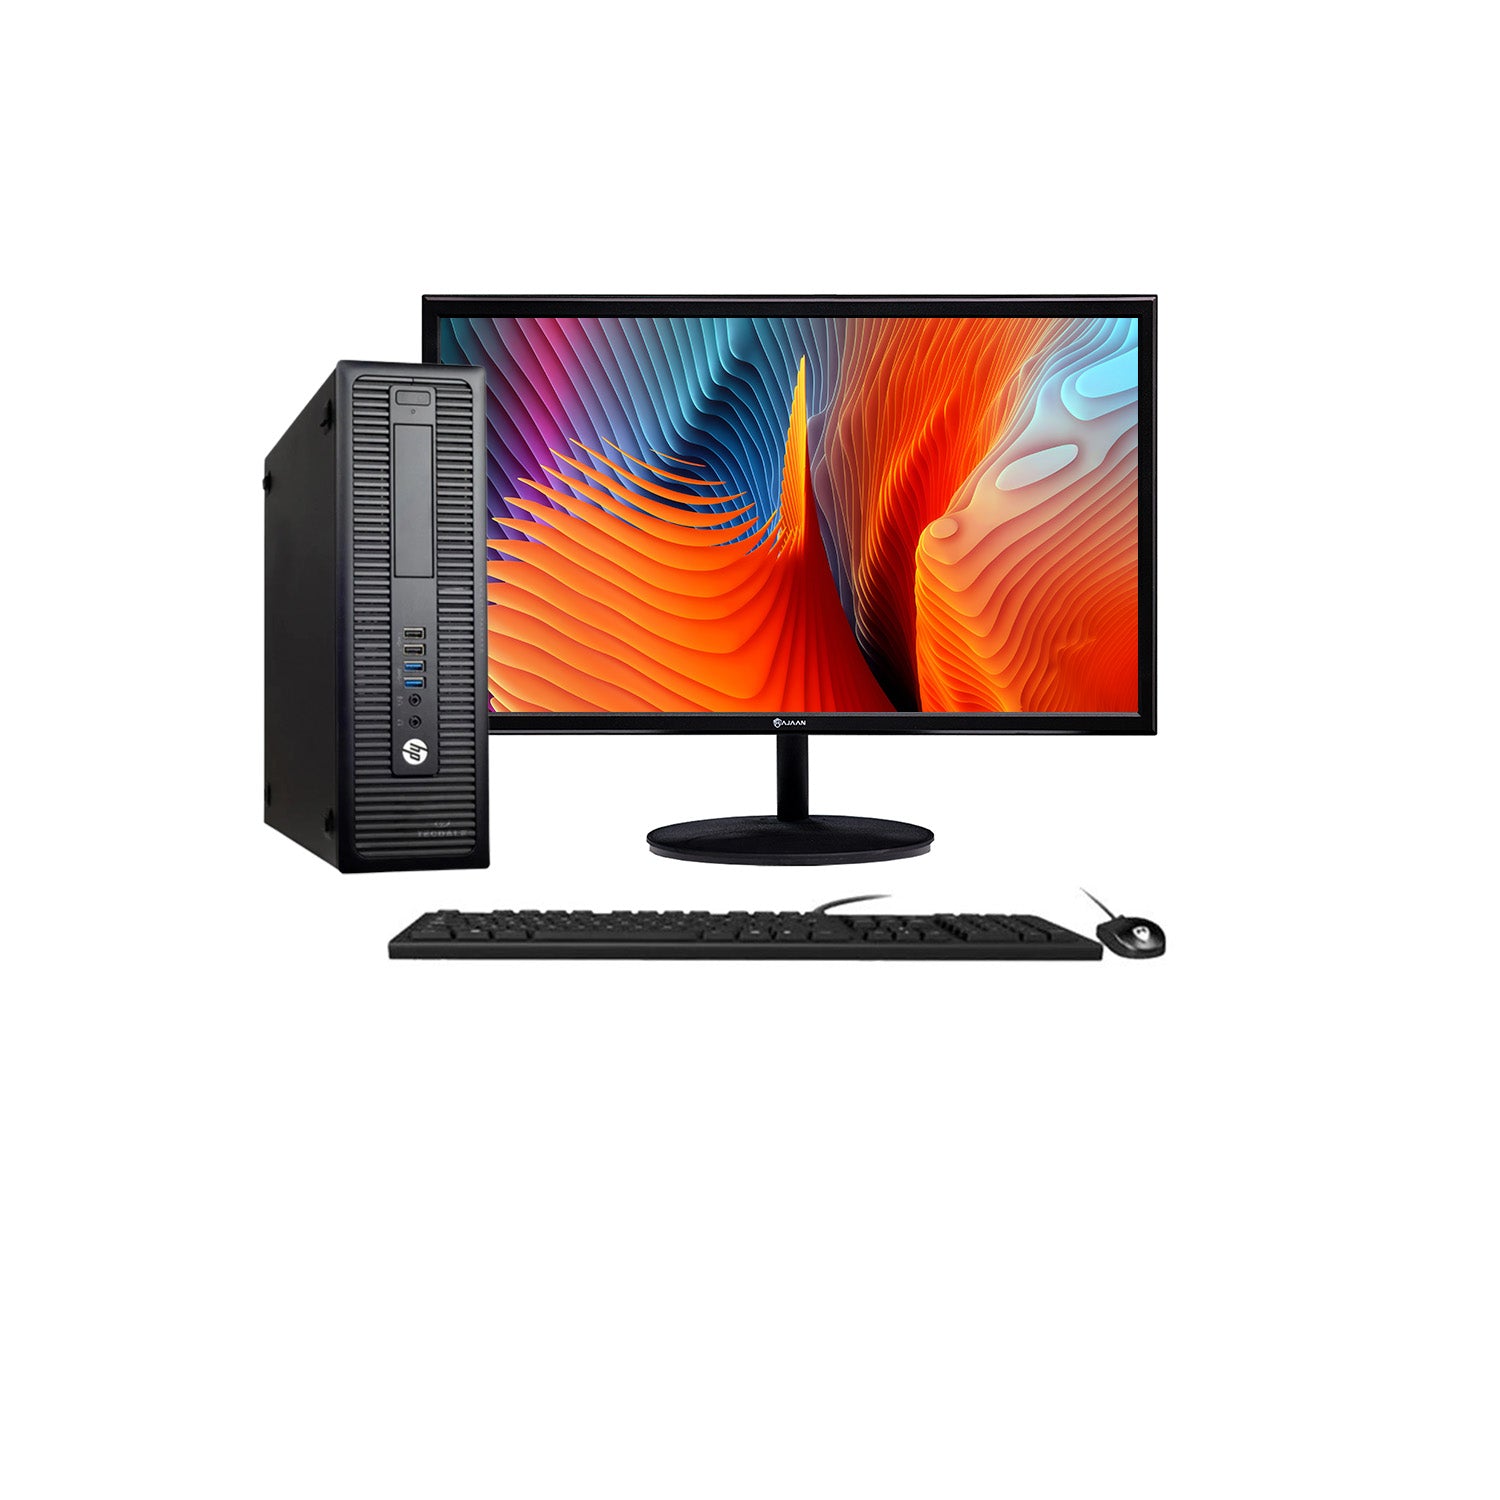 HP ProDesk SFF Desktop Computer with 22 inch Monitor - Intel Core i7-4770 Processor 3.40 GHz |8GB - 16GB DDR3 RAM| 256GB - 512GB SSD| Windows 10 Professional WIFI